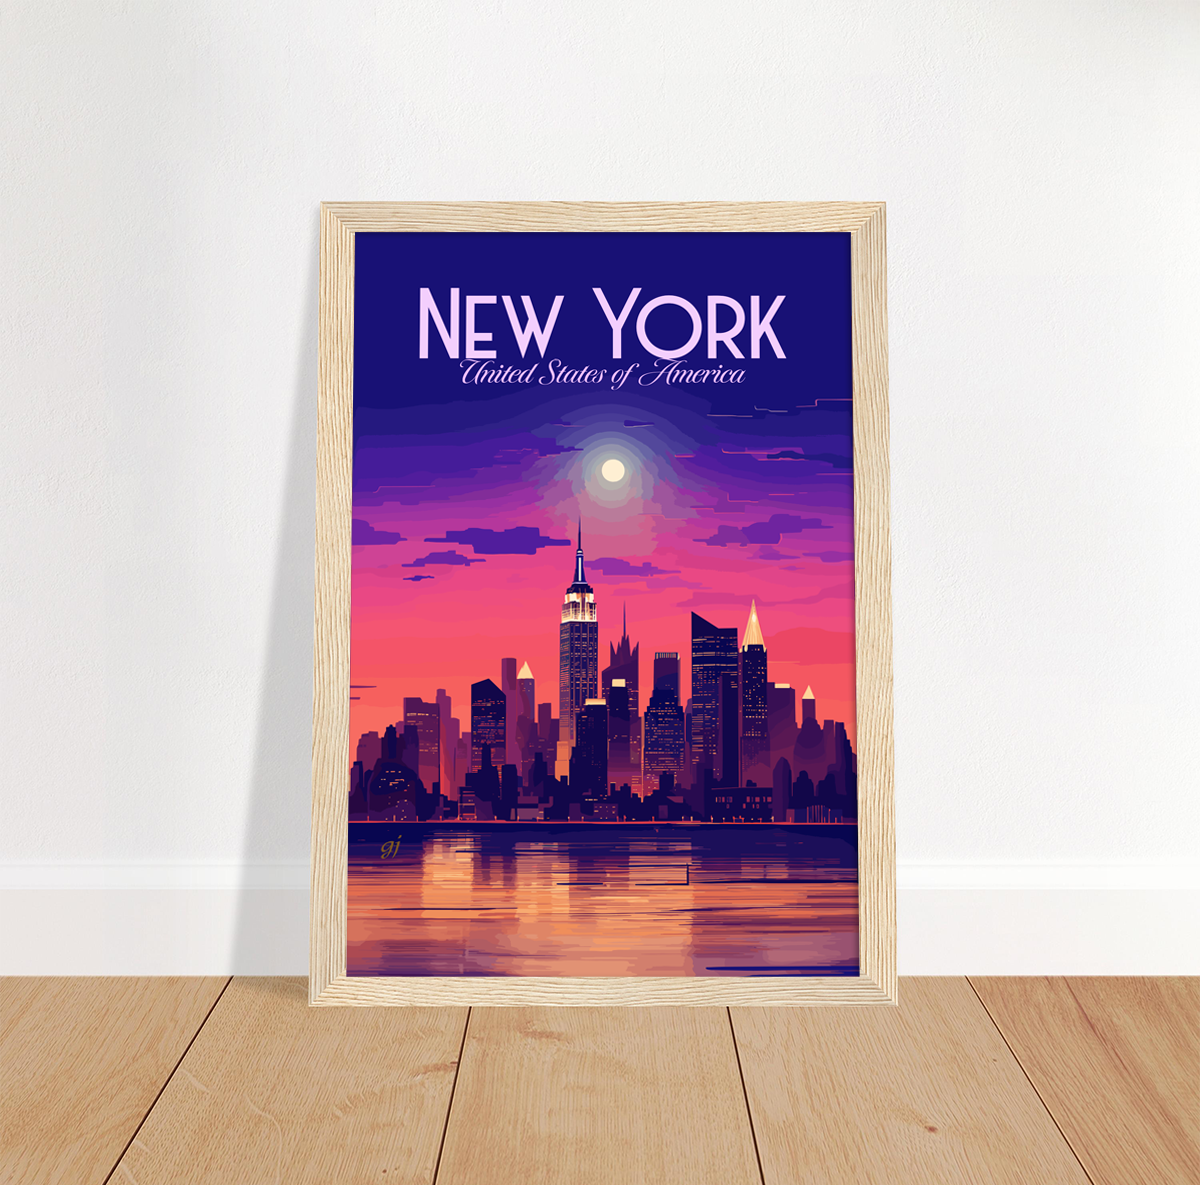 New York poster by bon voyage design